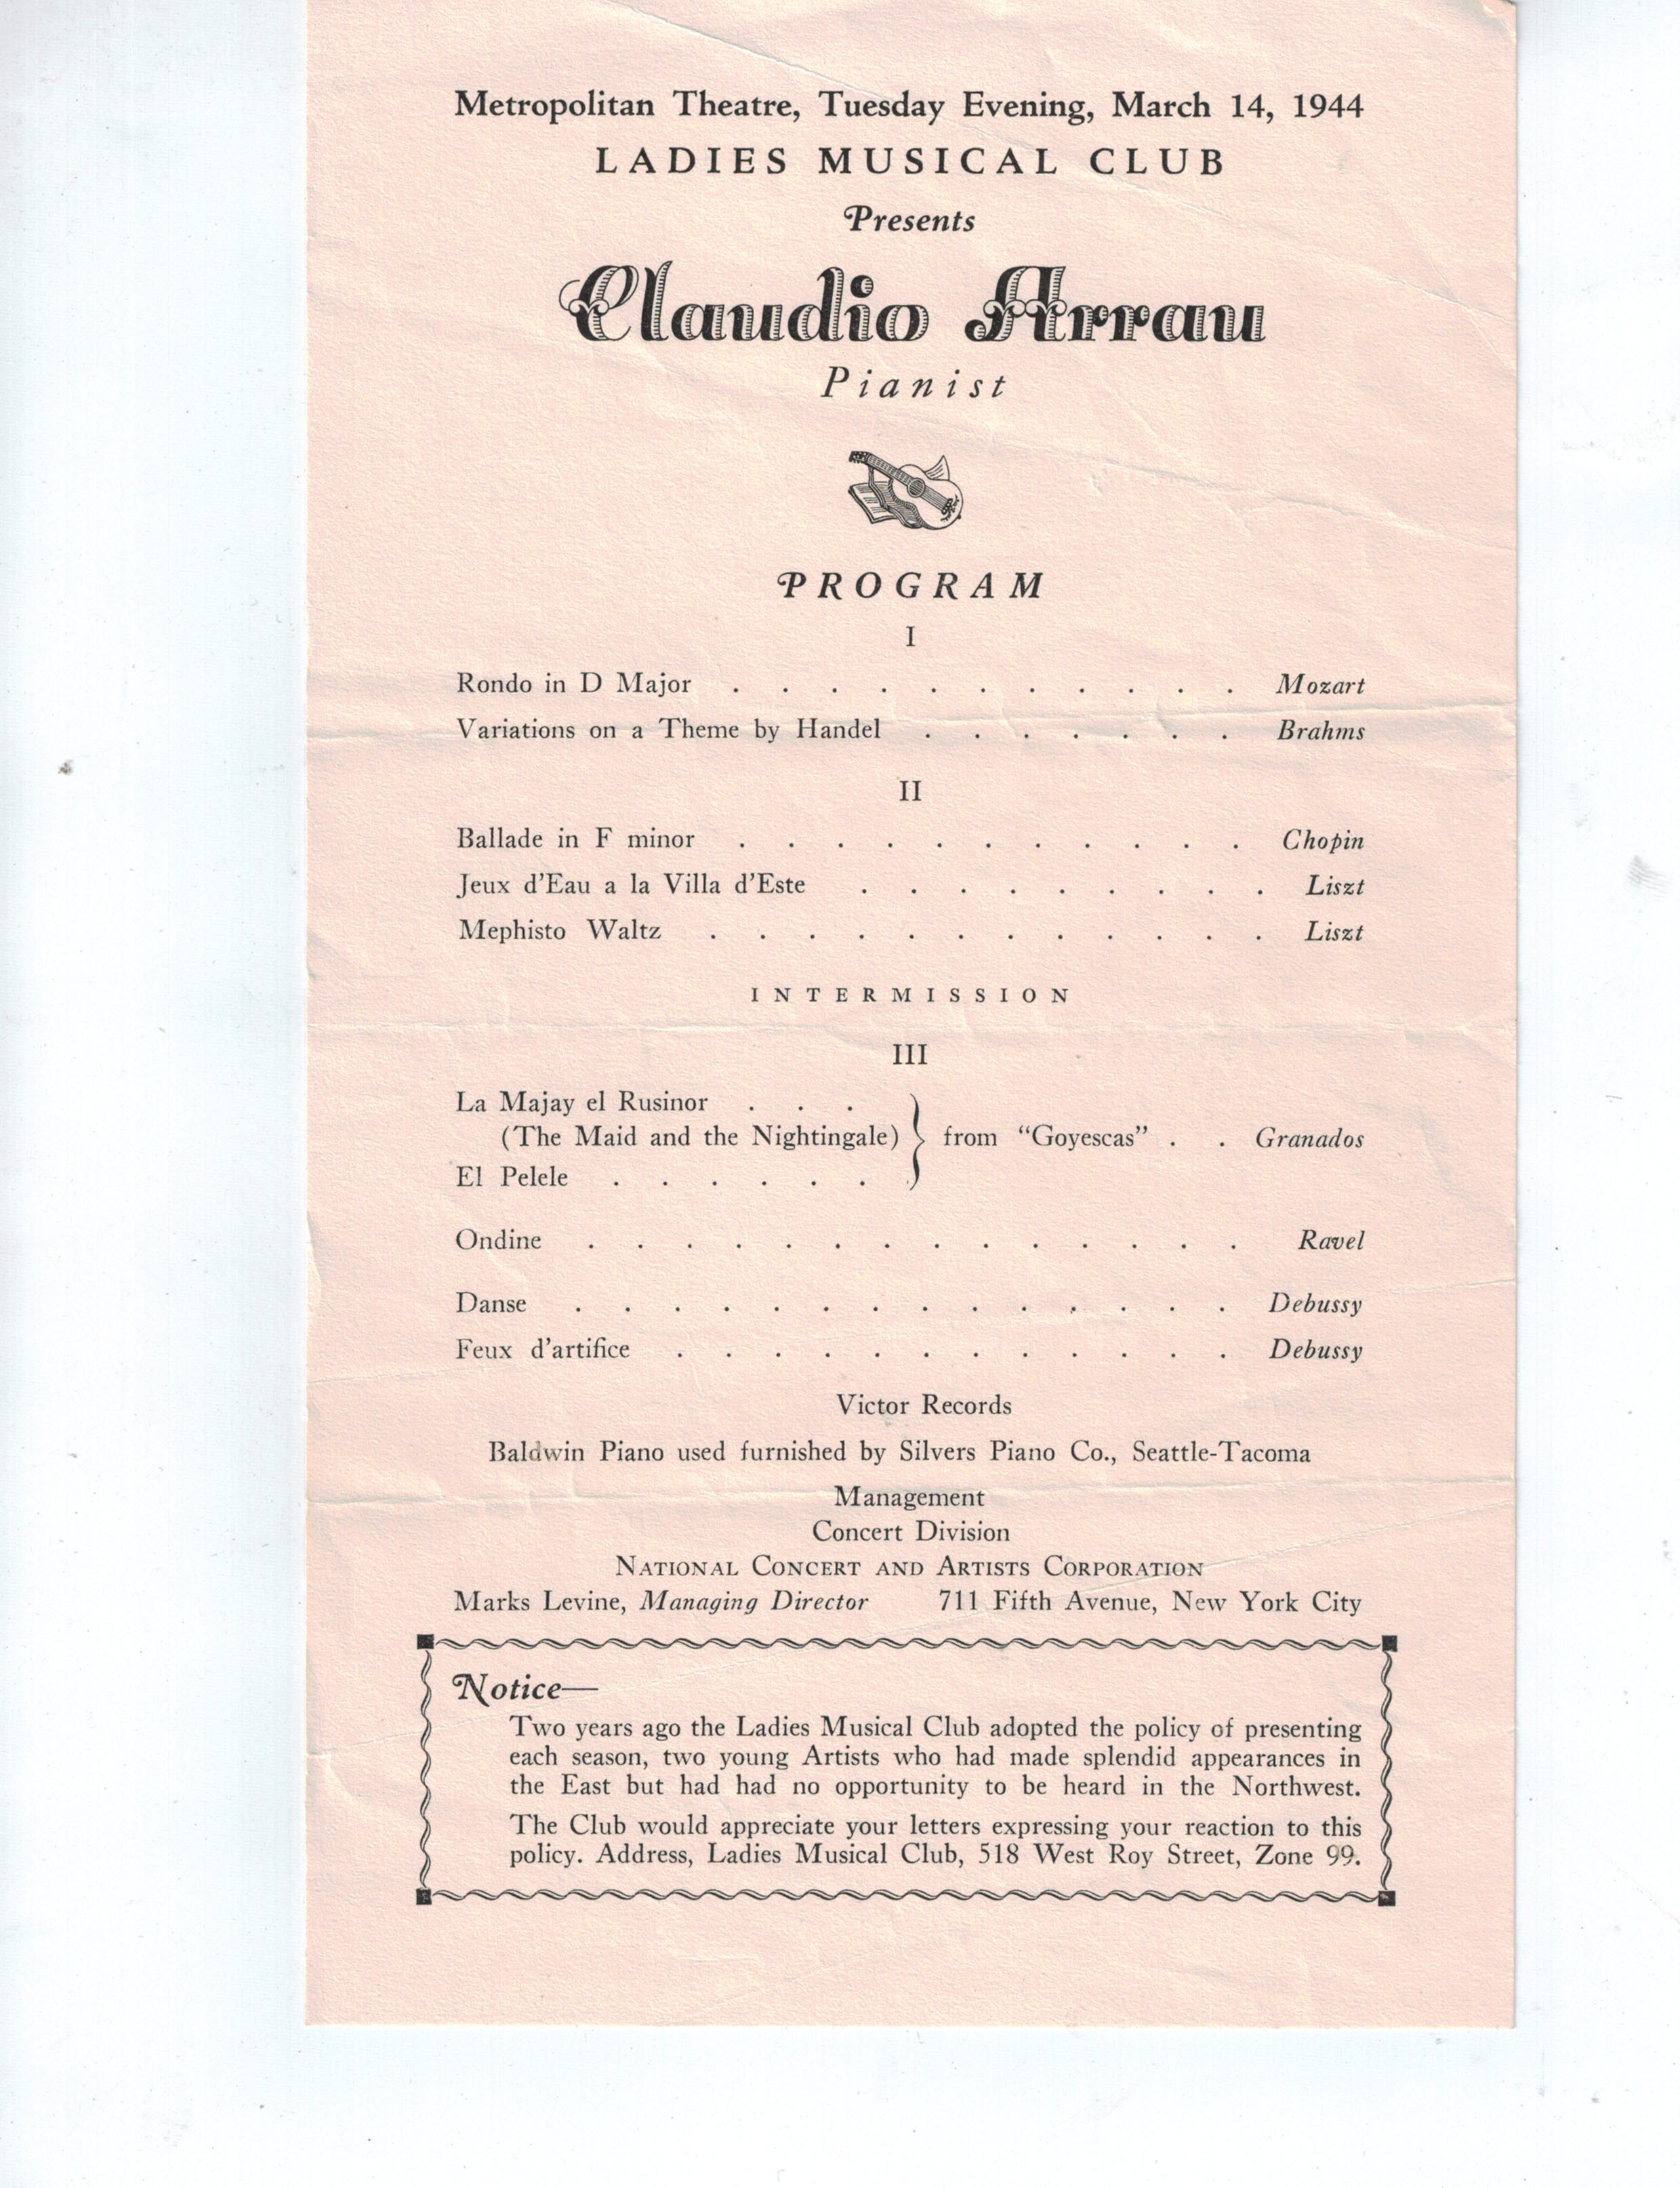 Claudio Arrau Concert Program 1944